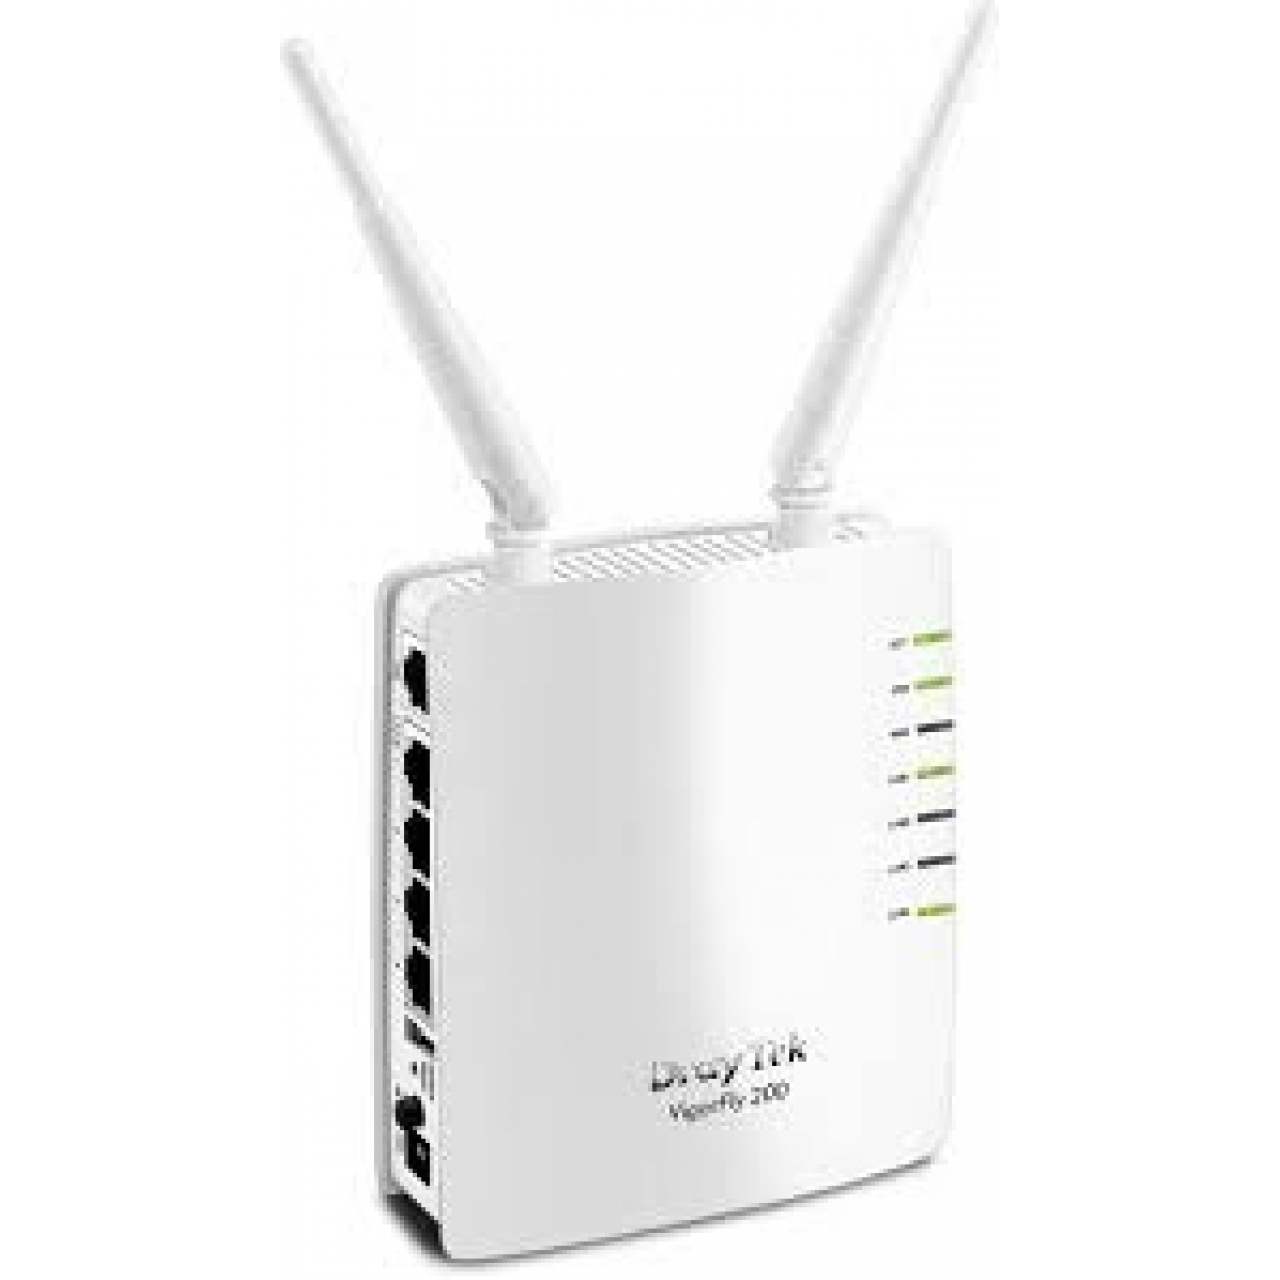 DRAYTEK VigorFly 200 Wireless Router 300Mbps 4 Port Ethernet - 1 Port WAN - 1